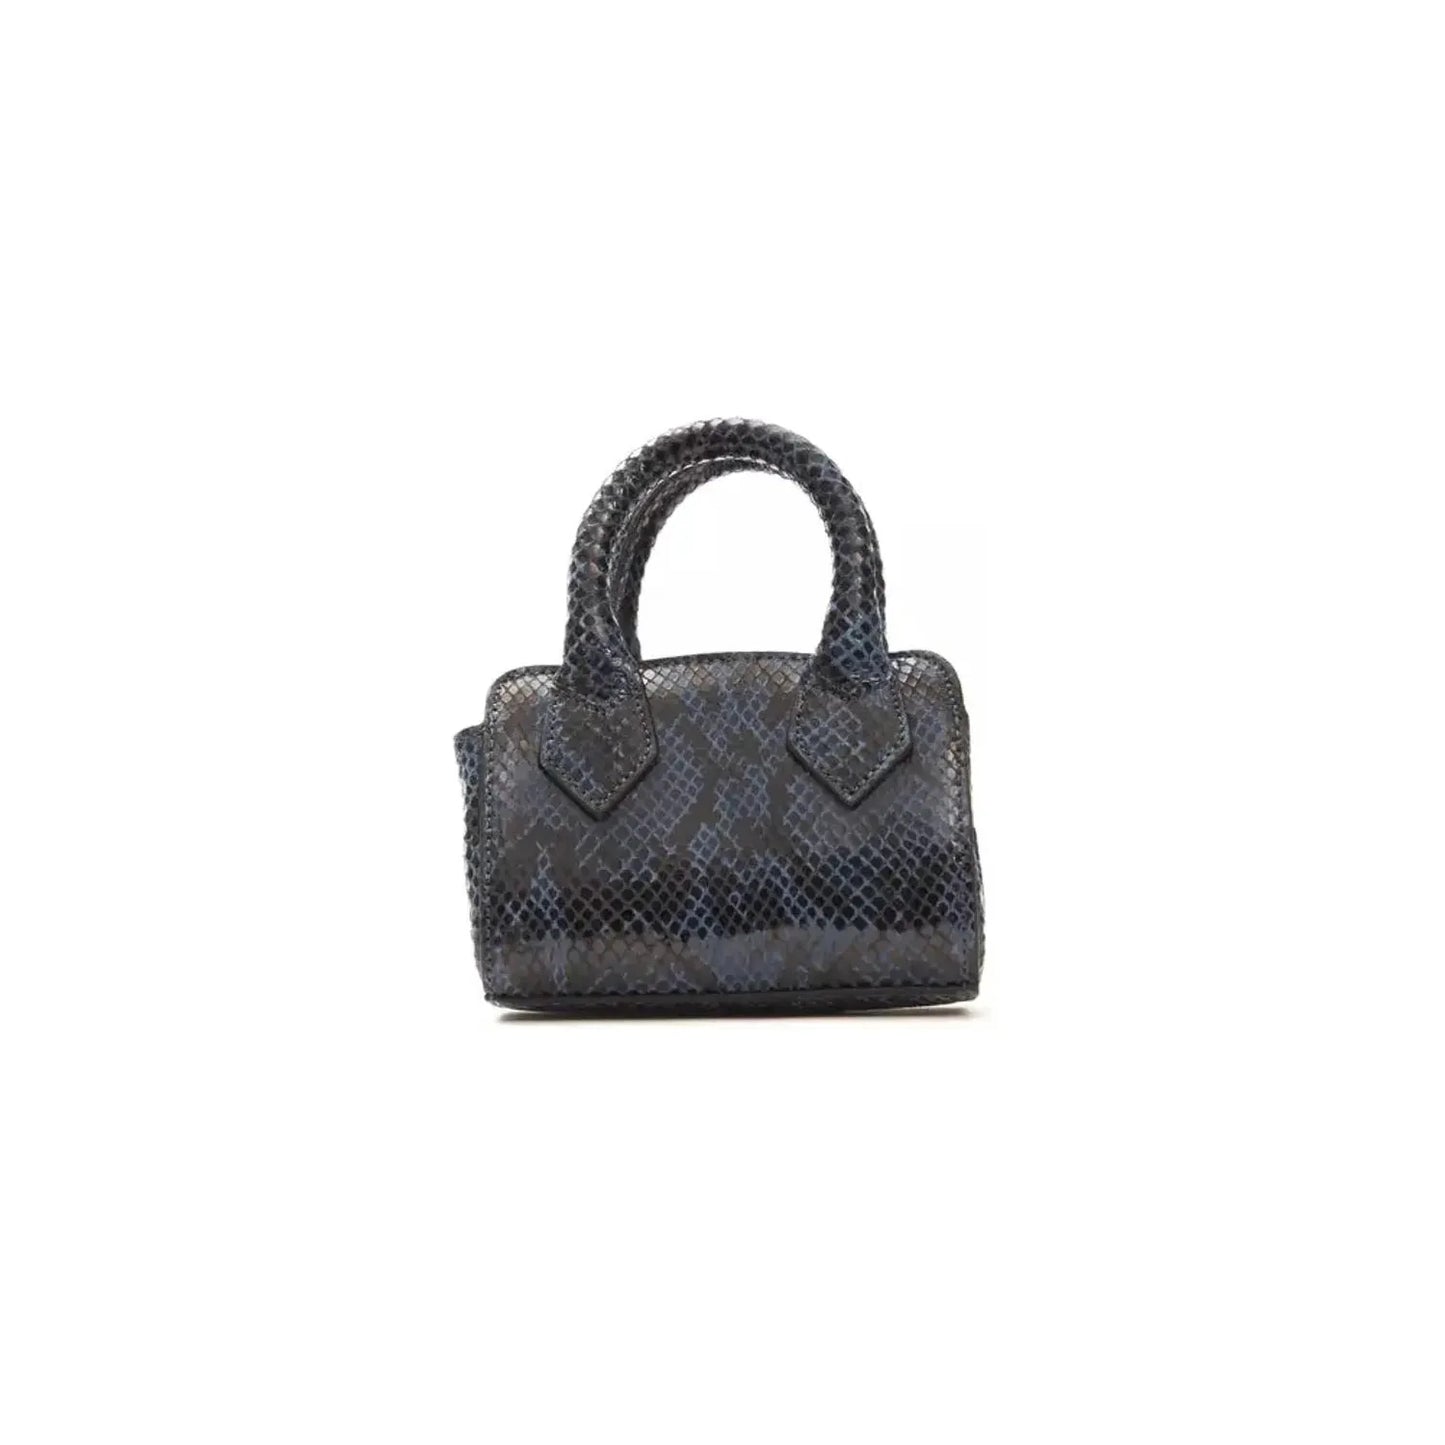 Pompei Donatella Chic Python Print Mini Tote Elegance Handbags, Wallets & Cases blu-navy-handbag-1